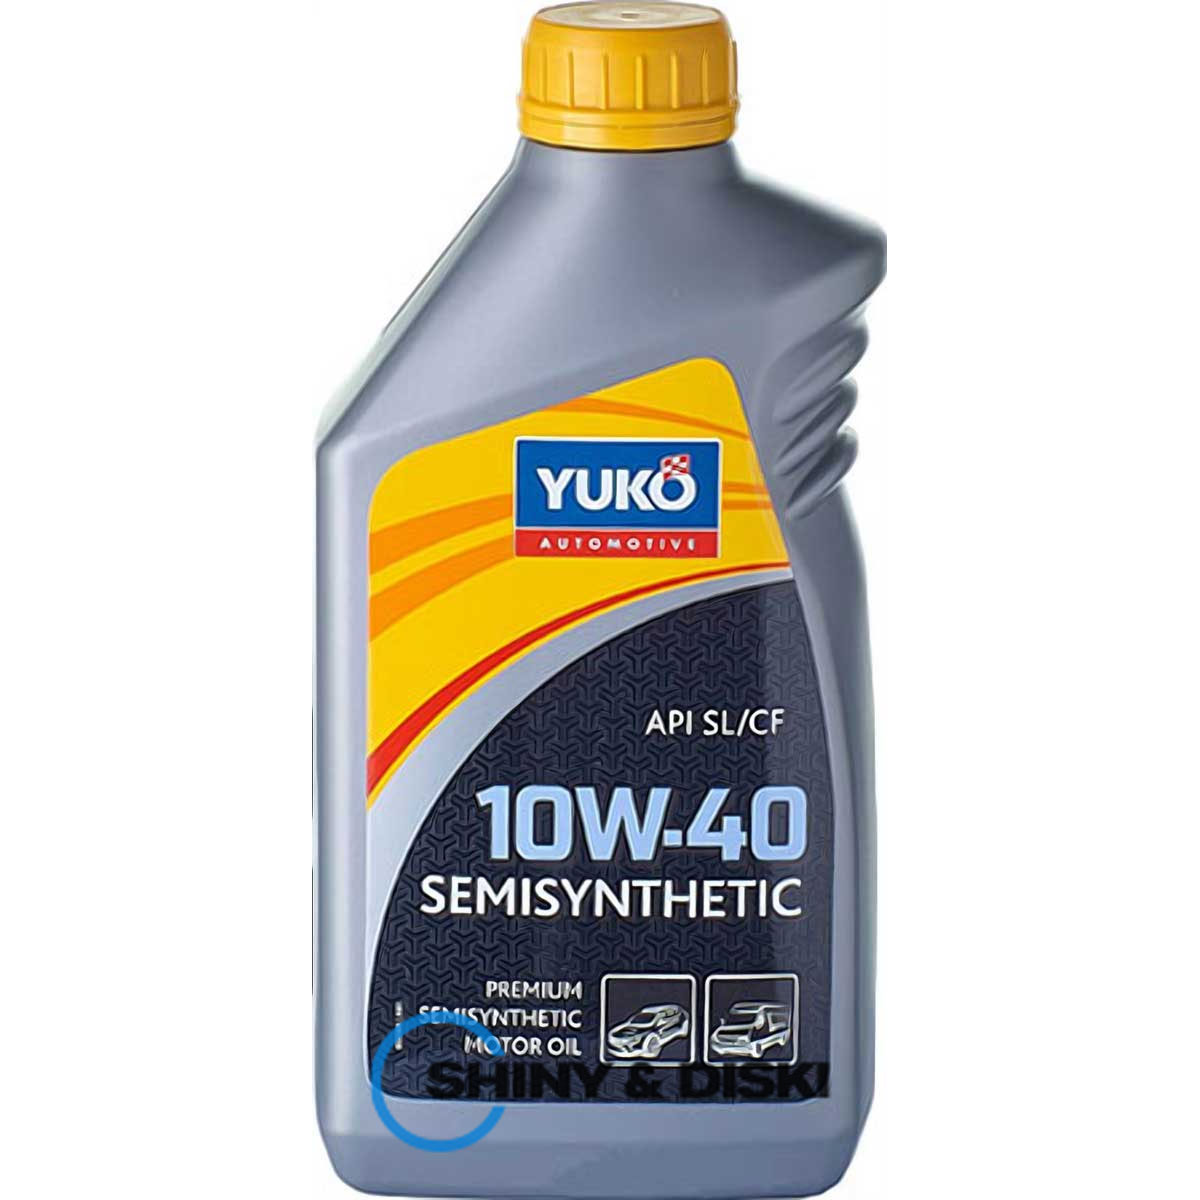 yuko semisynthetic 10w-40 (1л)